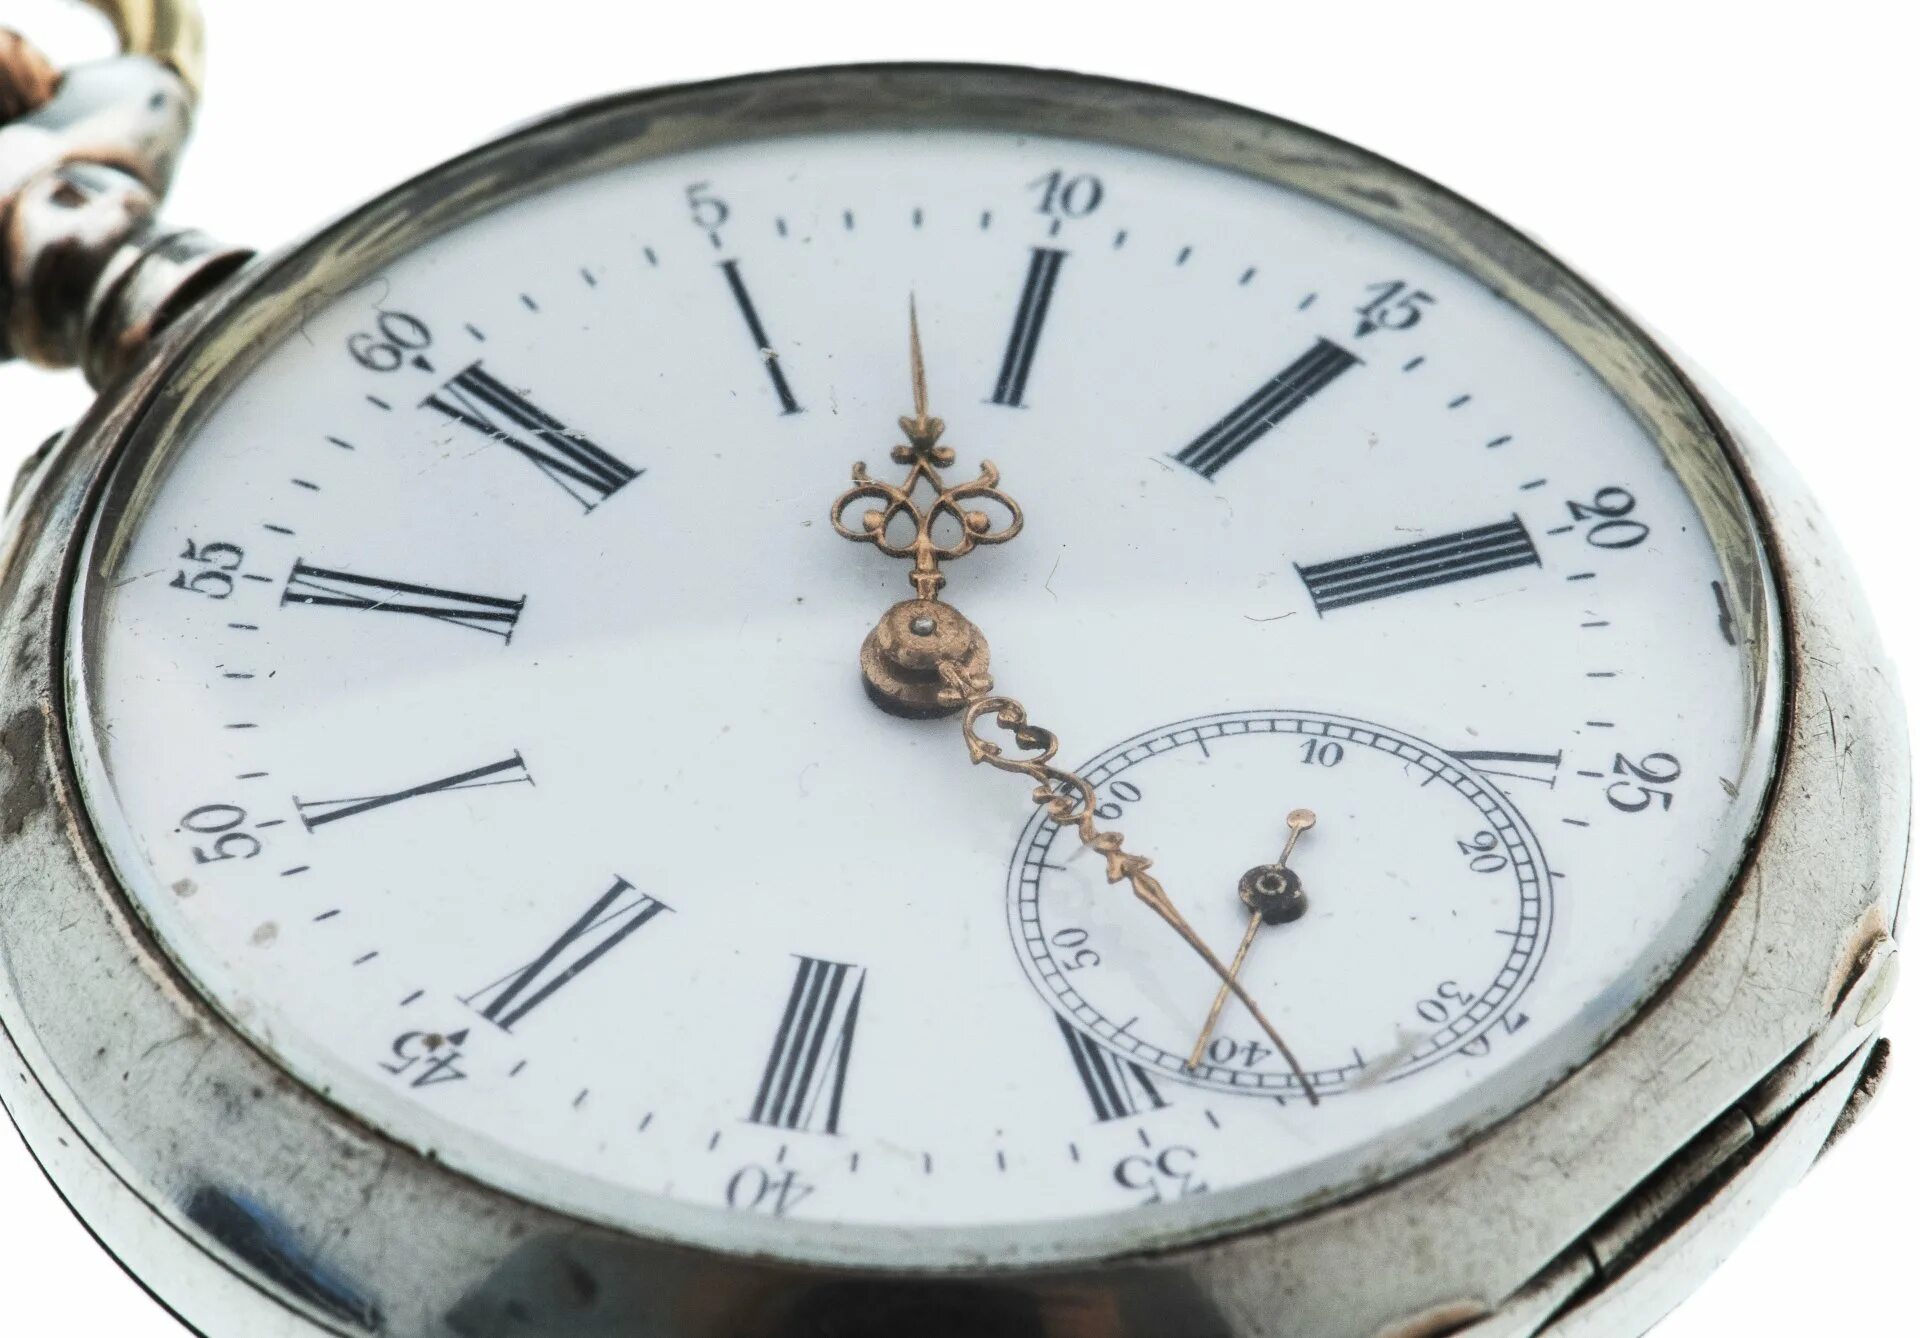 Хенри Леуба карманные часы серебро. Henry Capt карманные часы. Часы карманные Zenith 3241020. Карманные часы 1900-1920г немецкие.